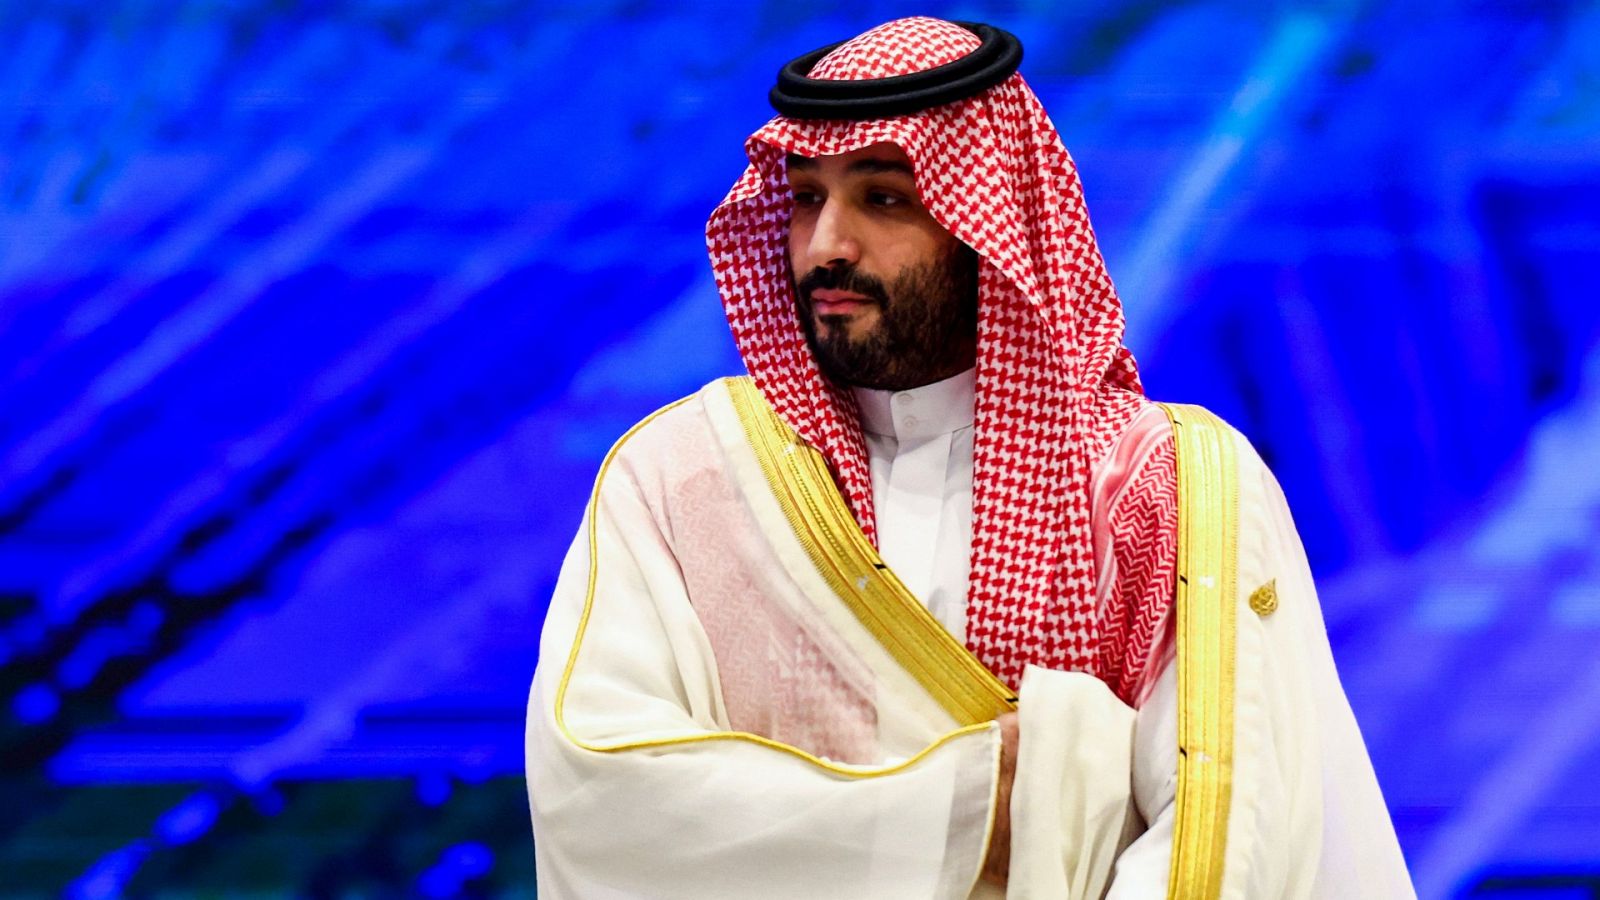 El príncipe heredero saudí Mohamed bin Salman